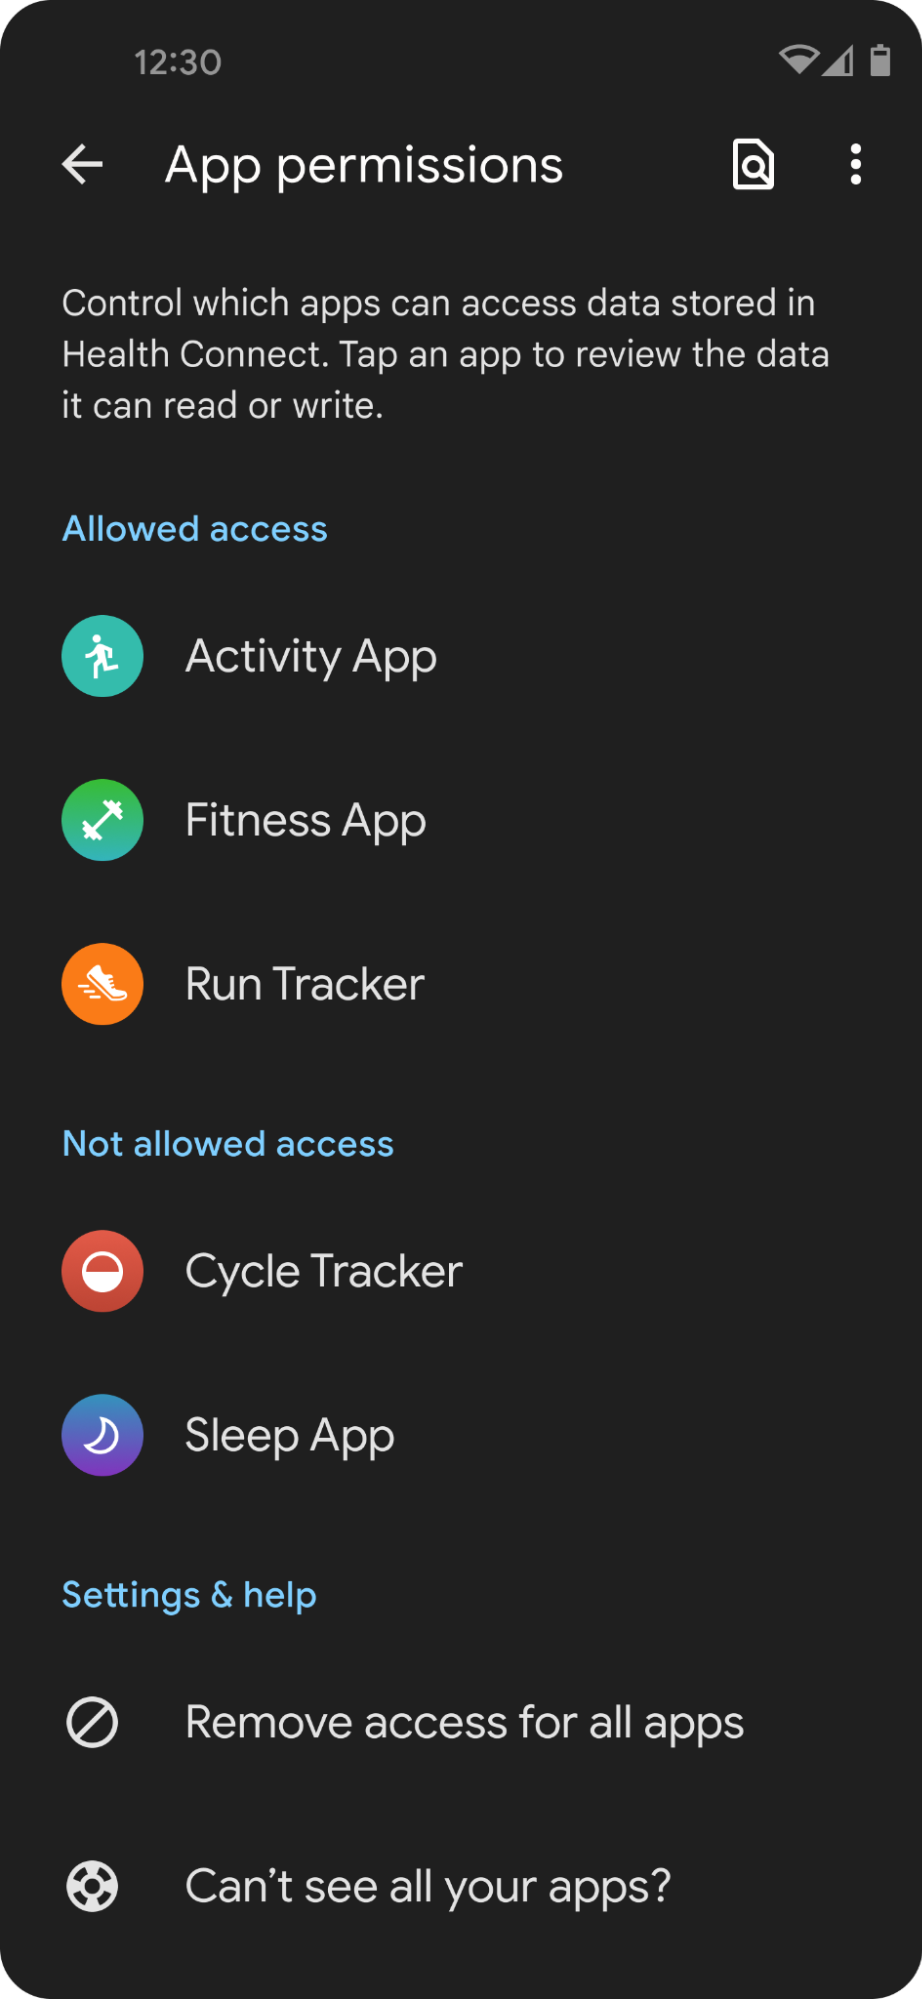 Google's health connect app